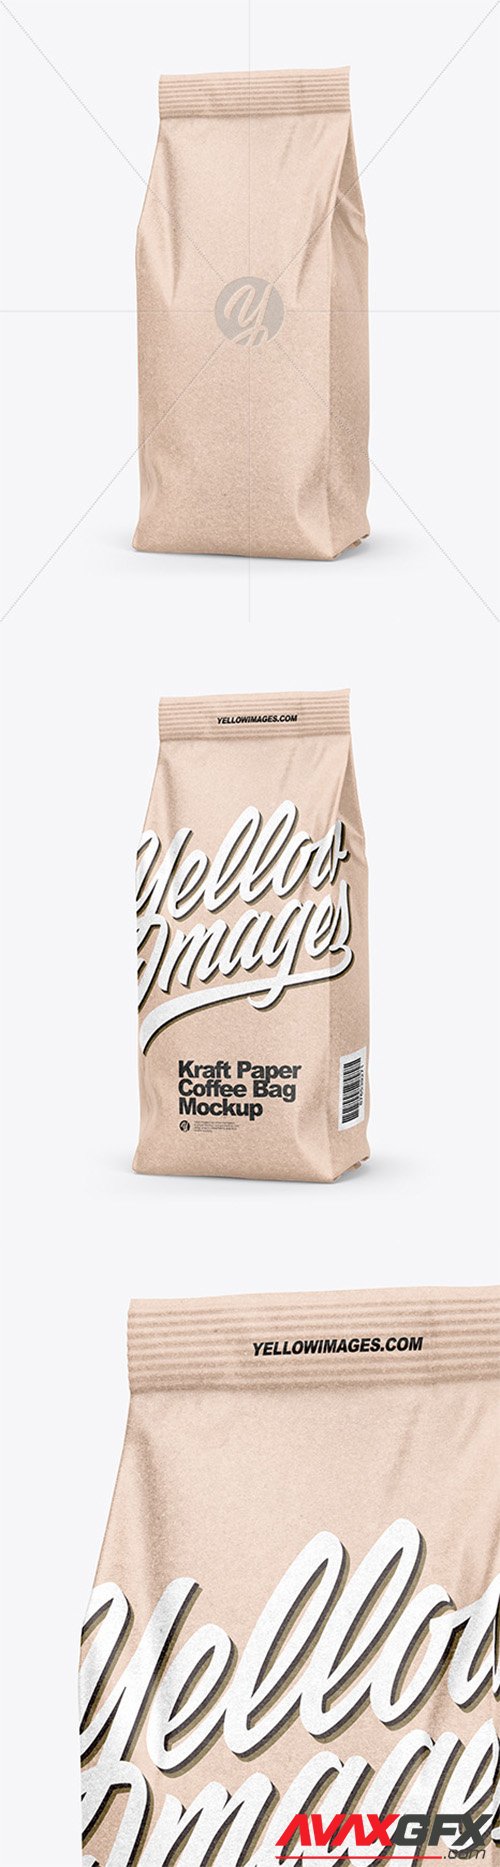 Download Kraft Coffee Bag Mockup - Half Side View 66451 » AVAXGFX ...